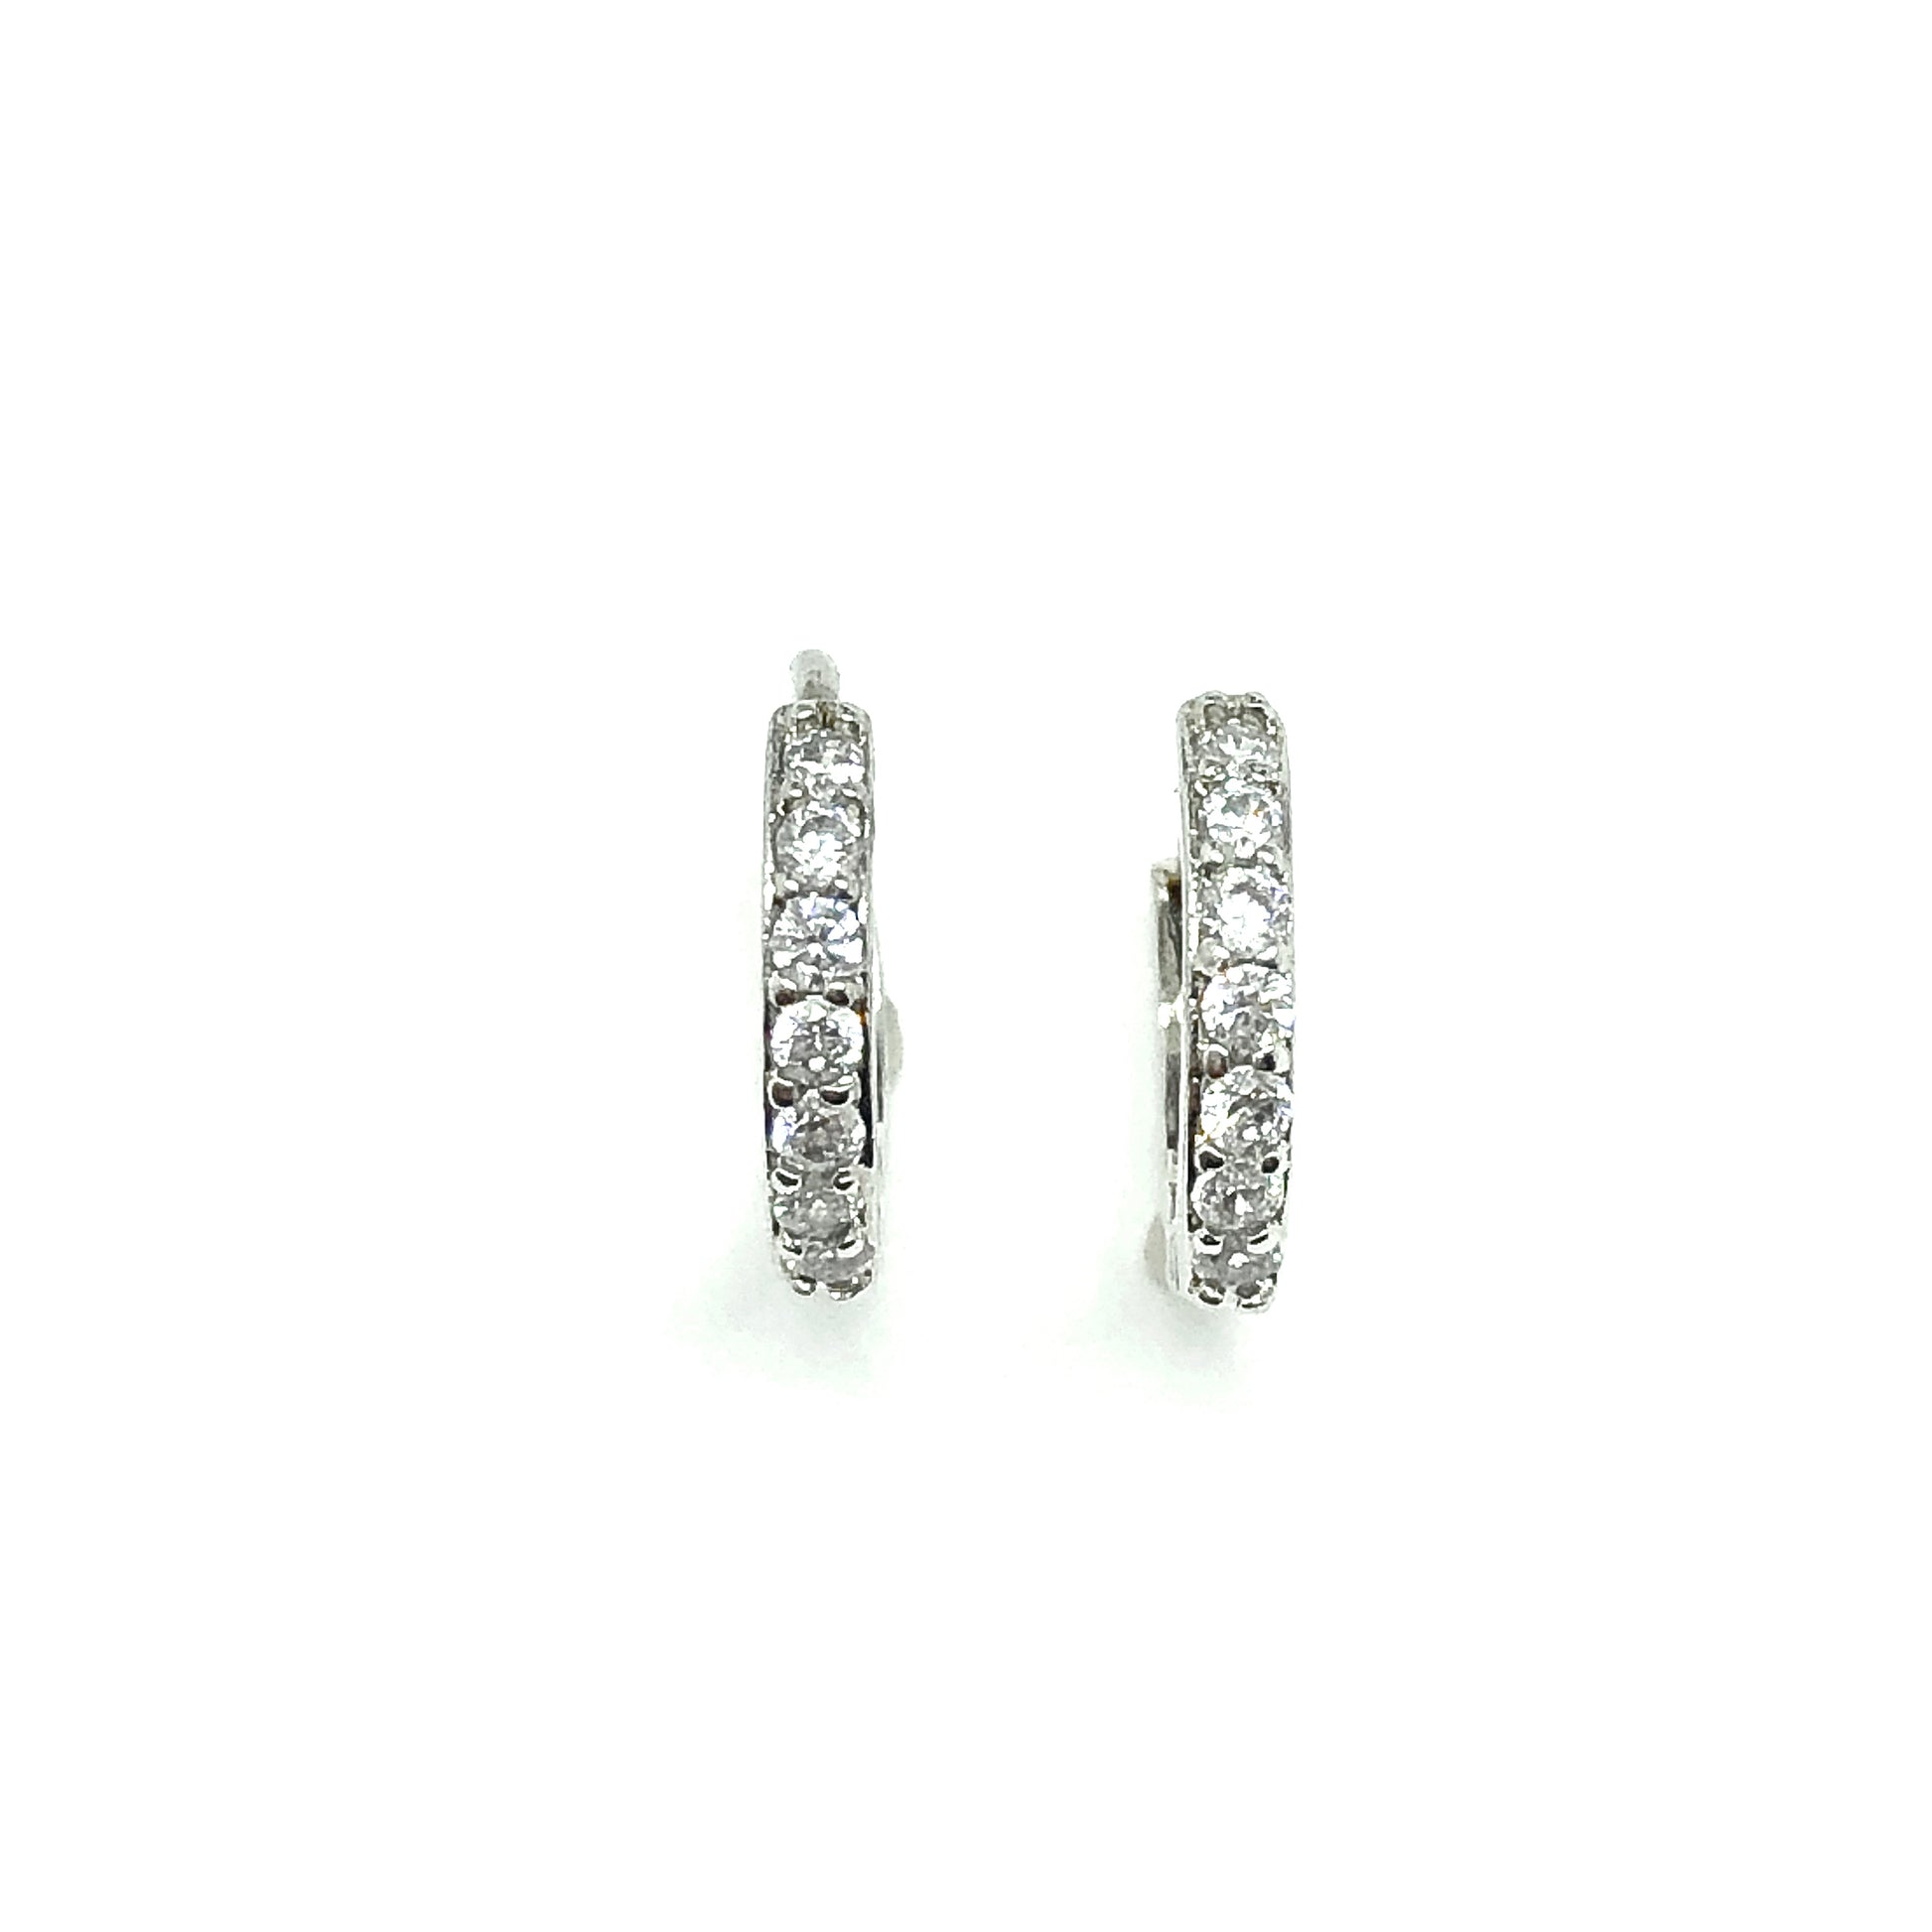 Blingschlingers - Silver Shimmery Crystal Small Hoop Earrings